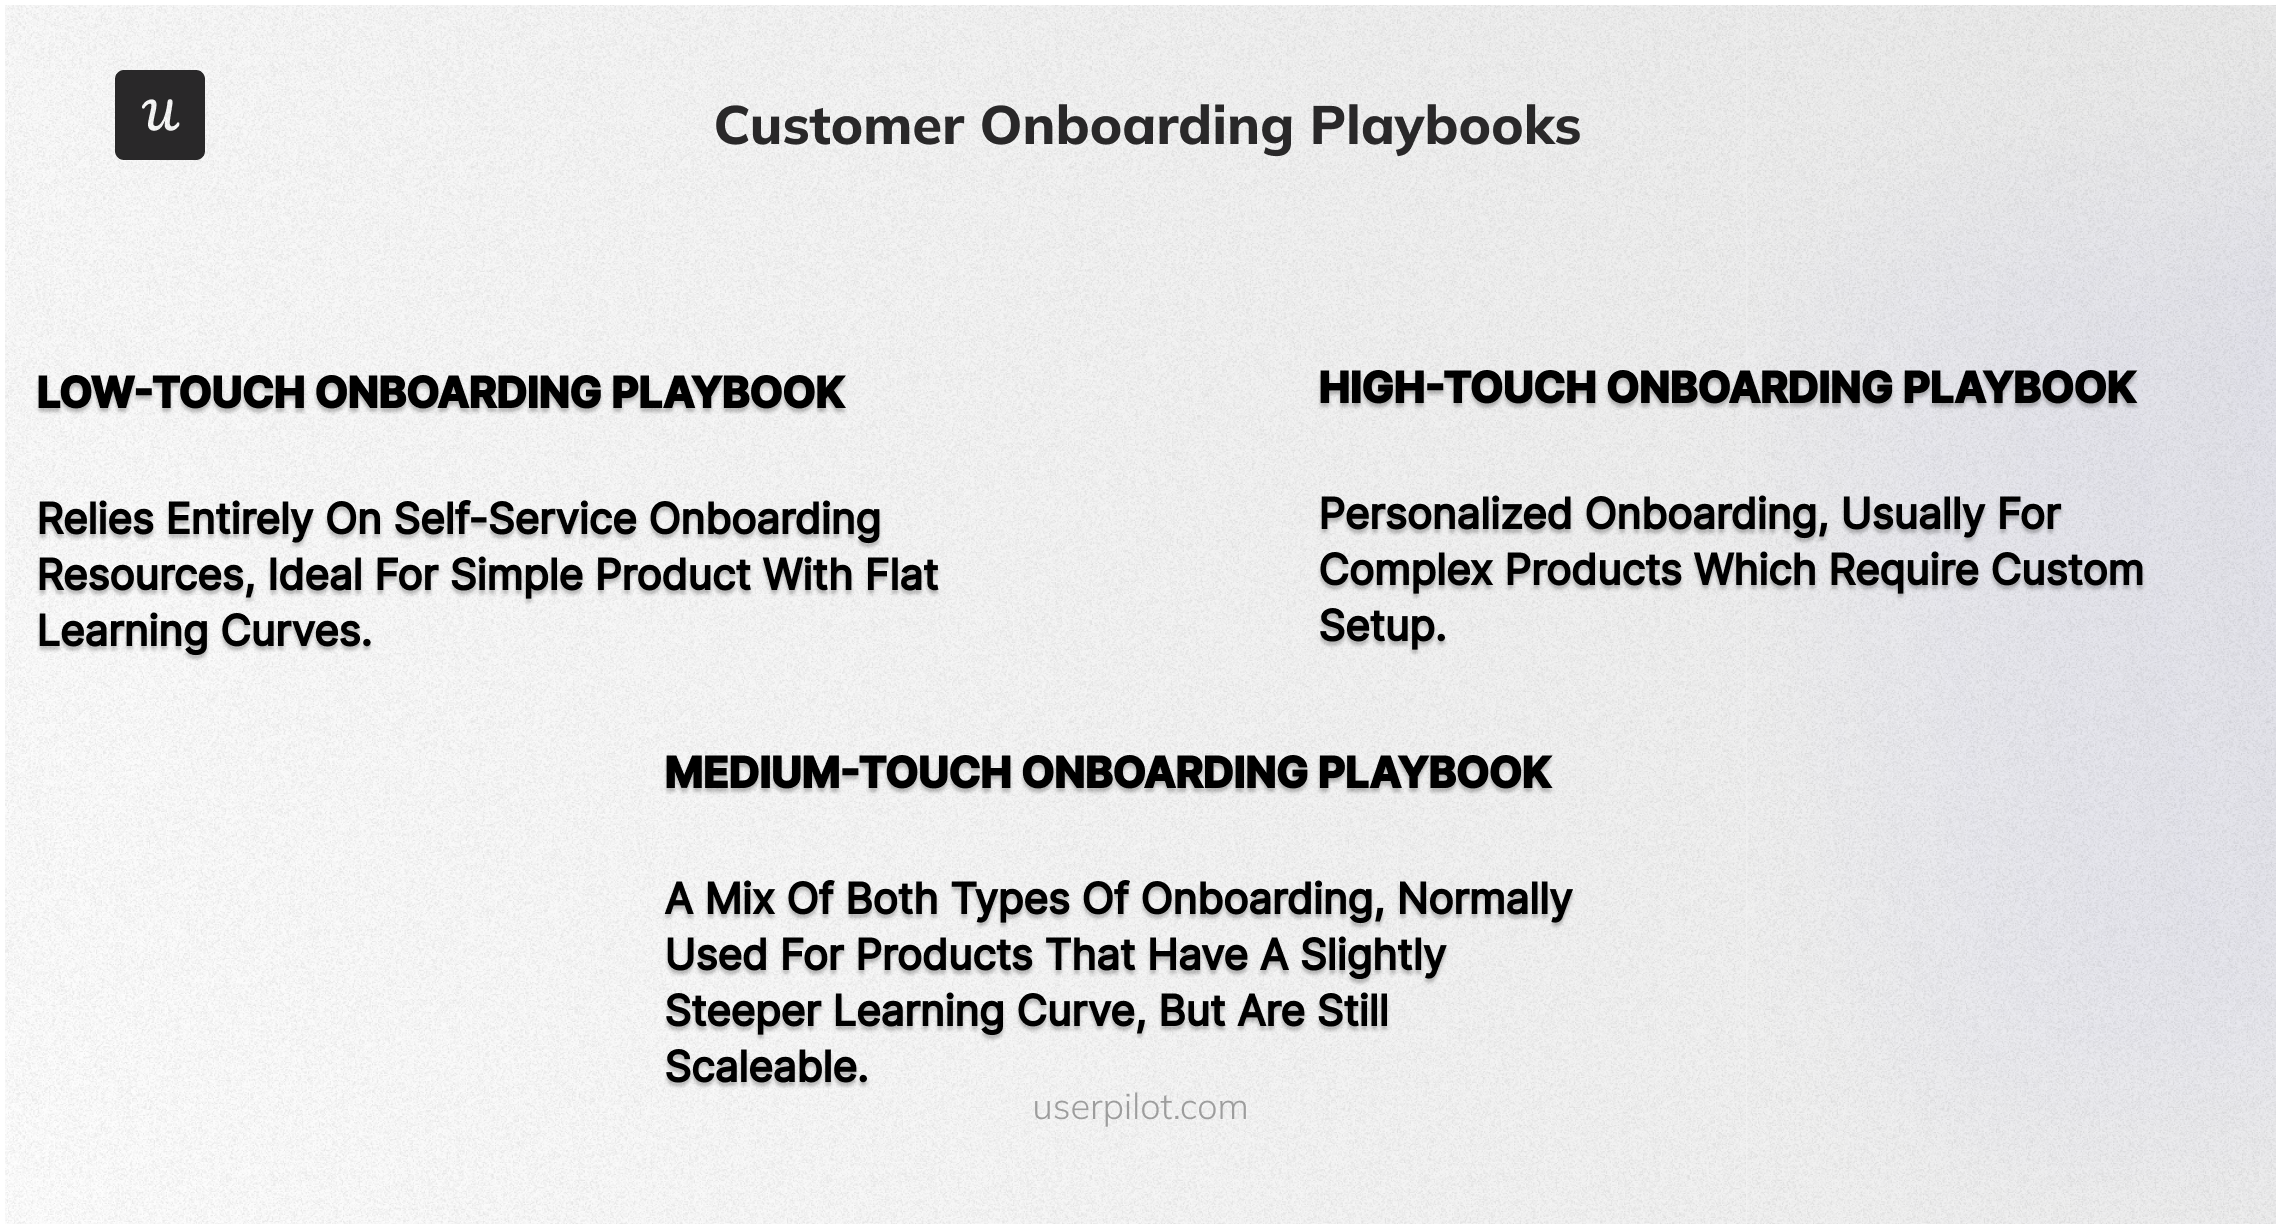 Customer onboarding playbooks